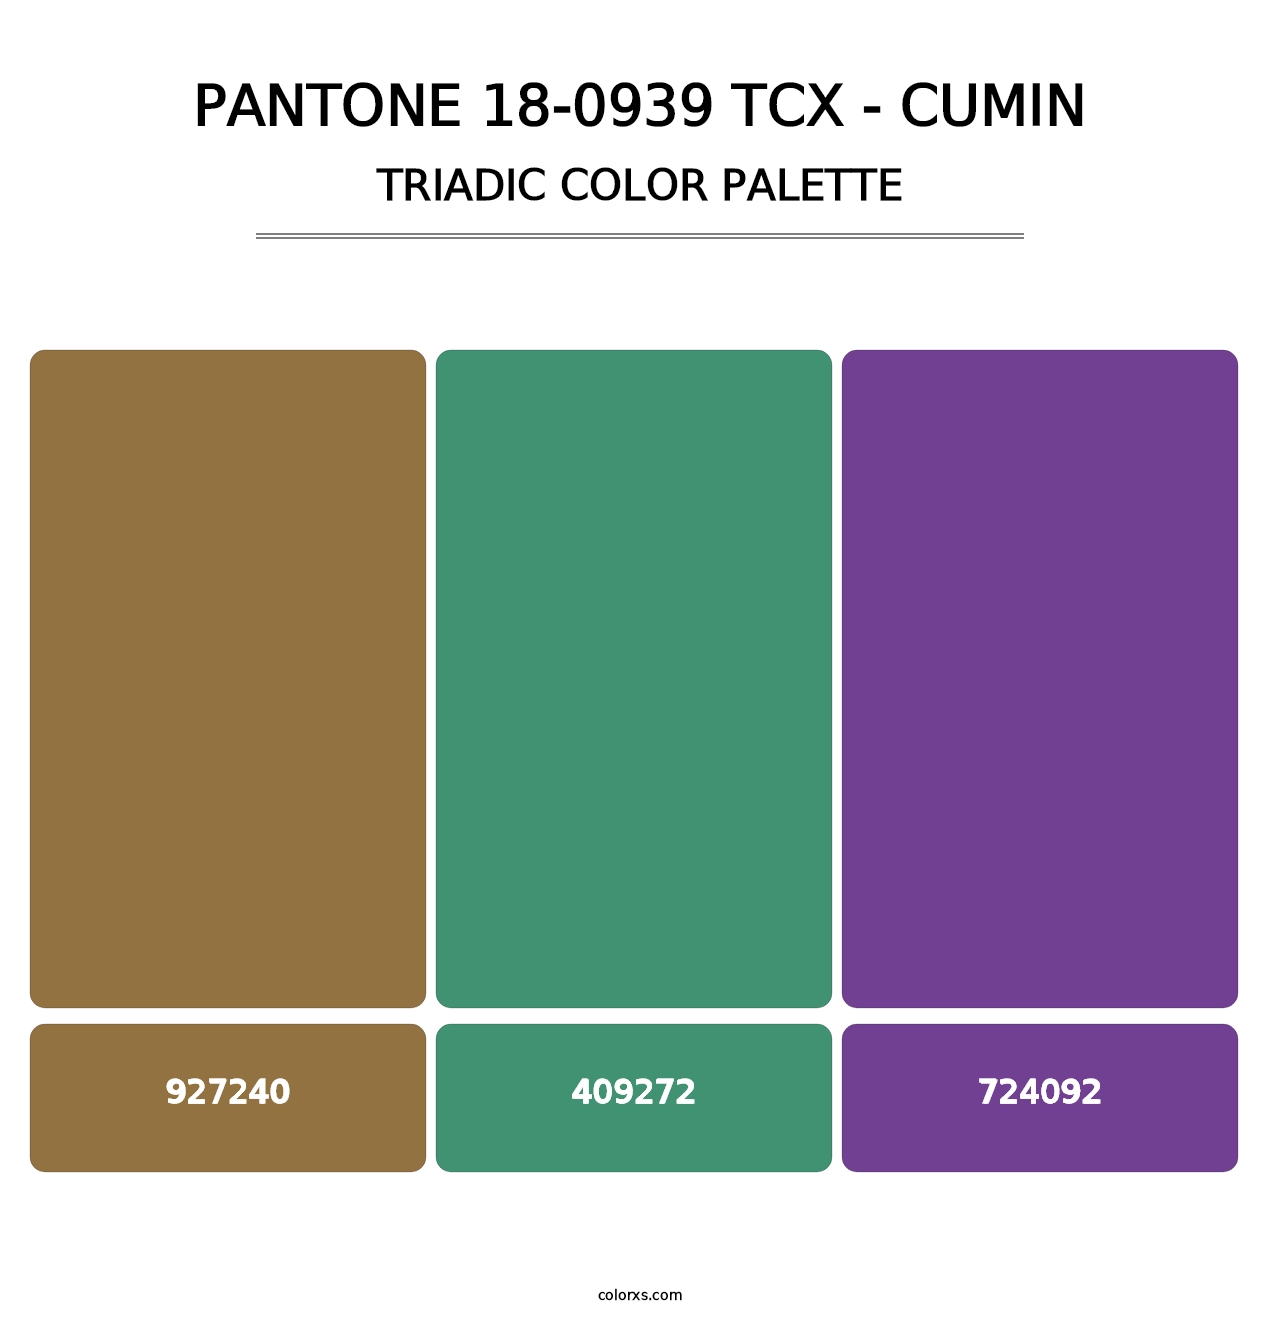 PANTONE 18-0939 TCX - Cumin - Triadic Color Palette